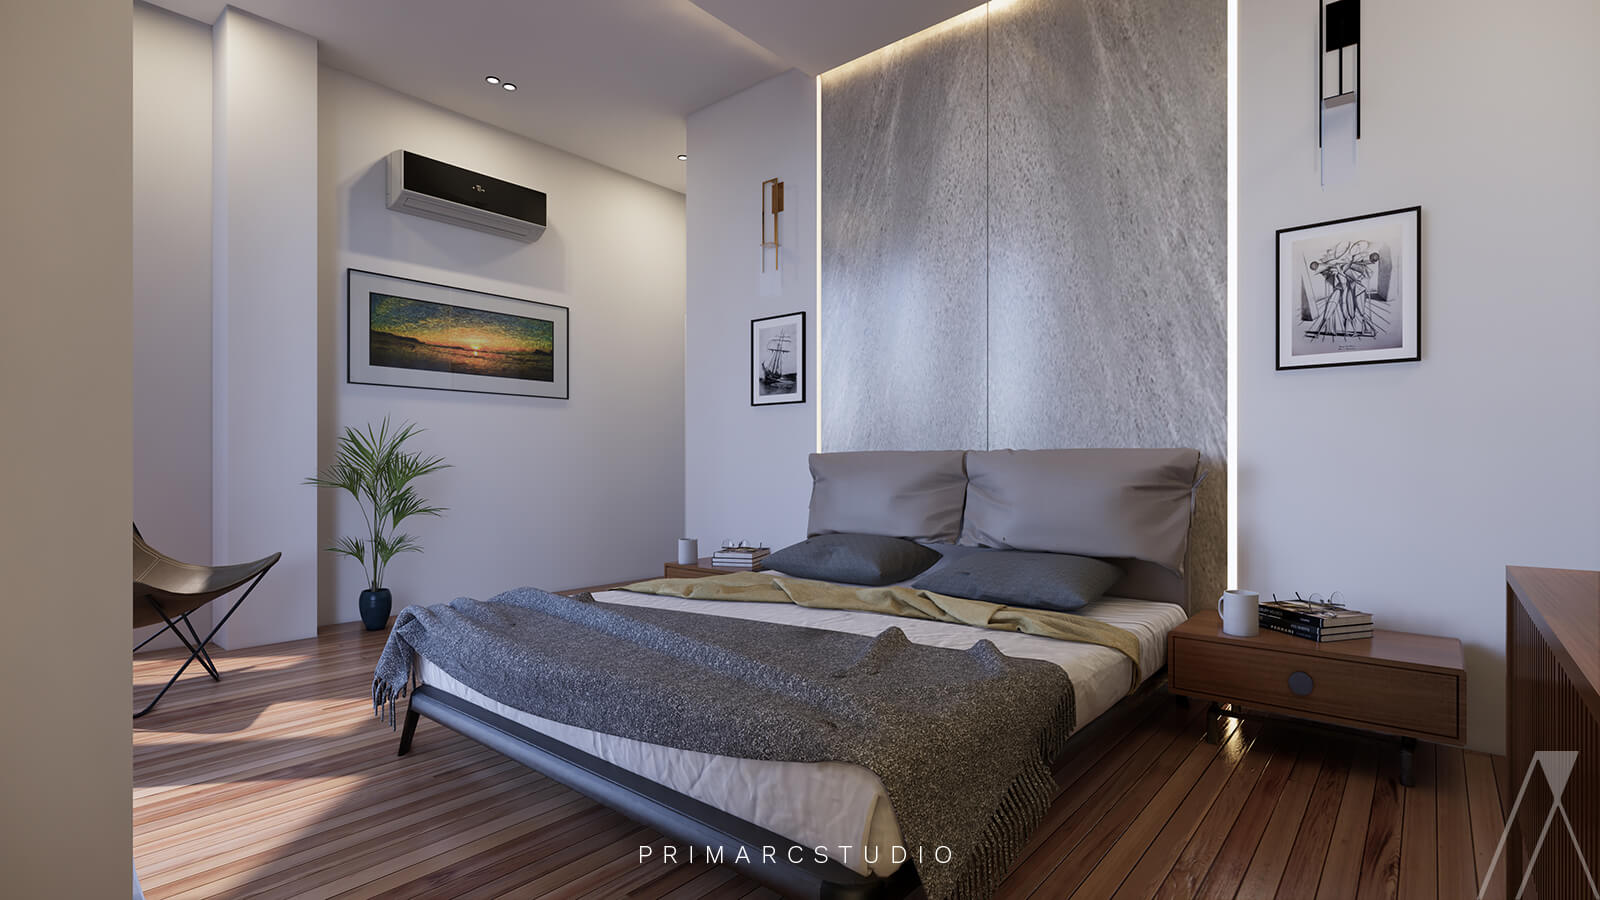 Bedroom interior design with backlit bedroom wall